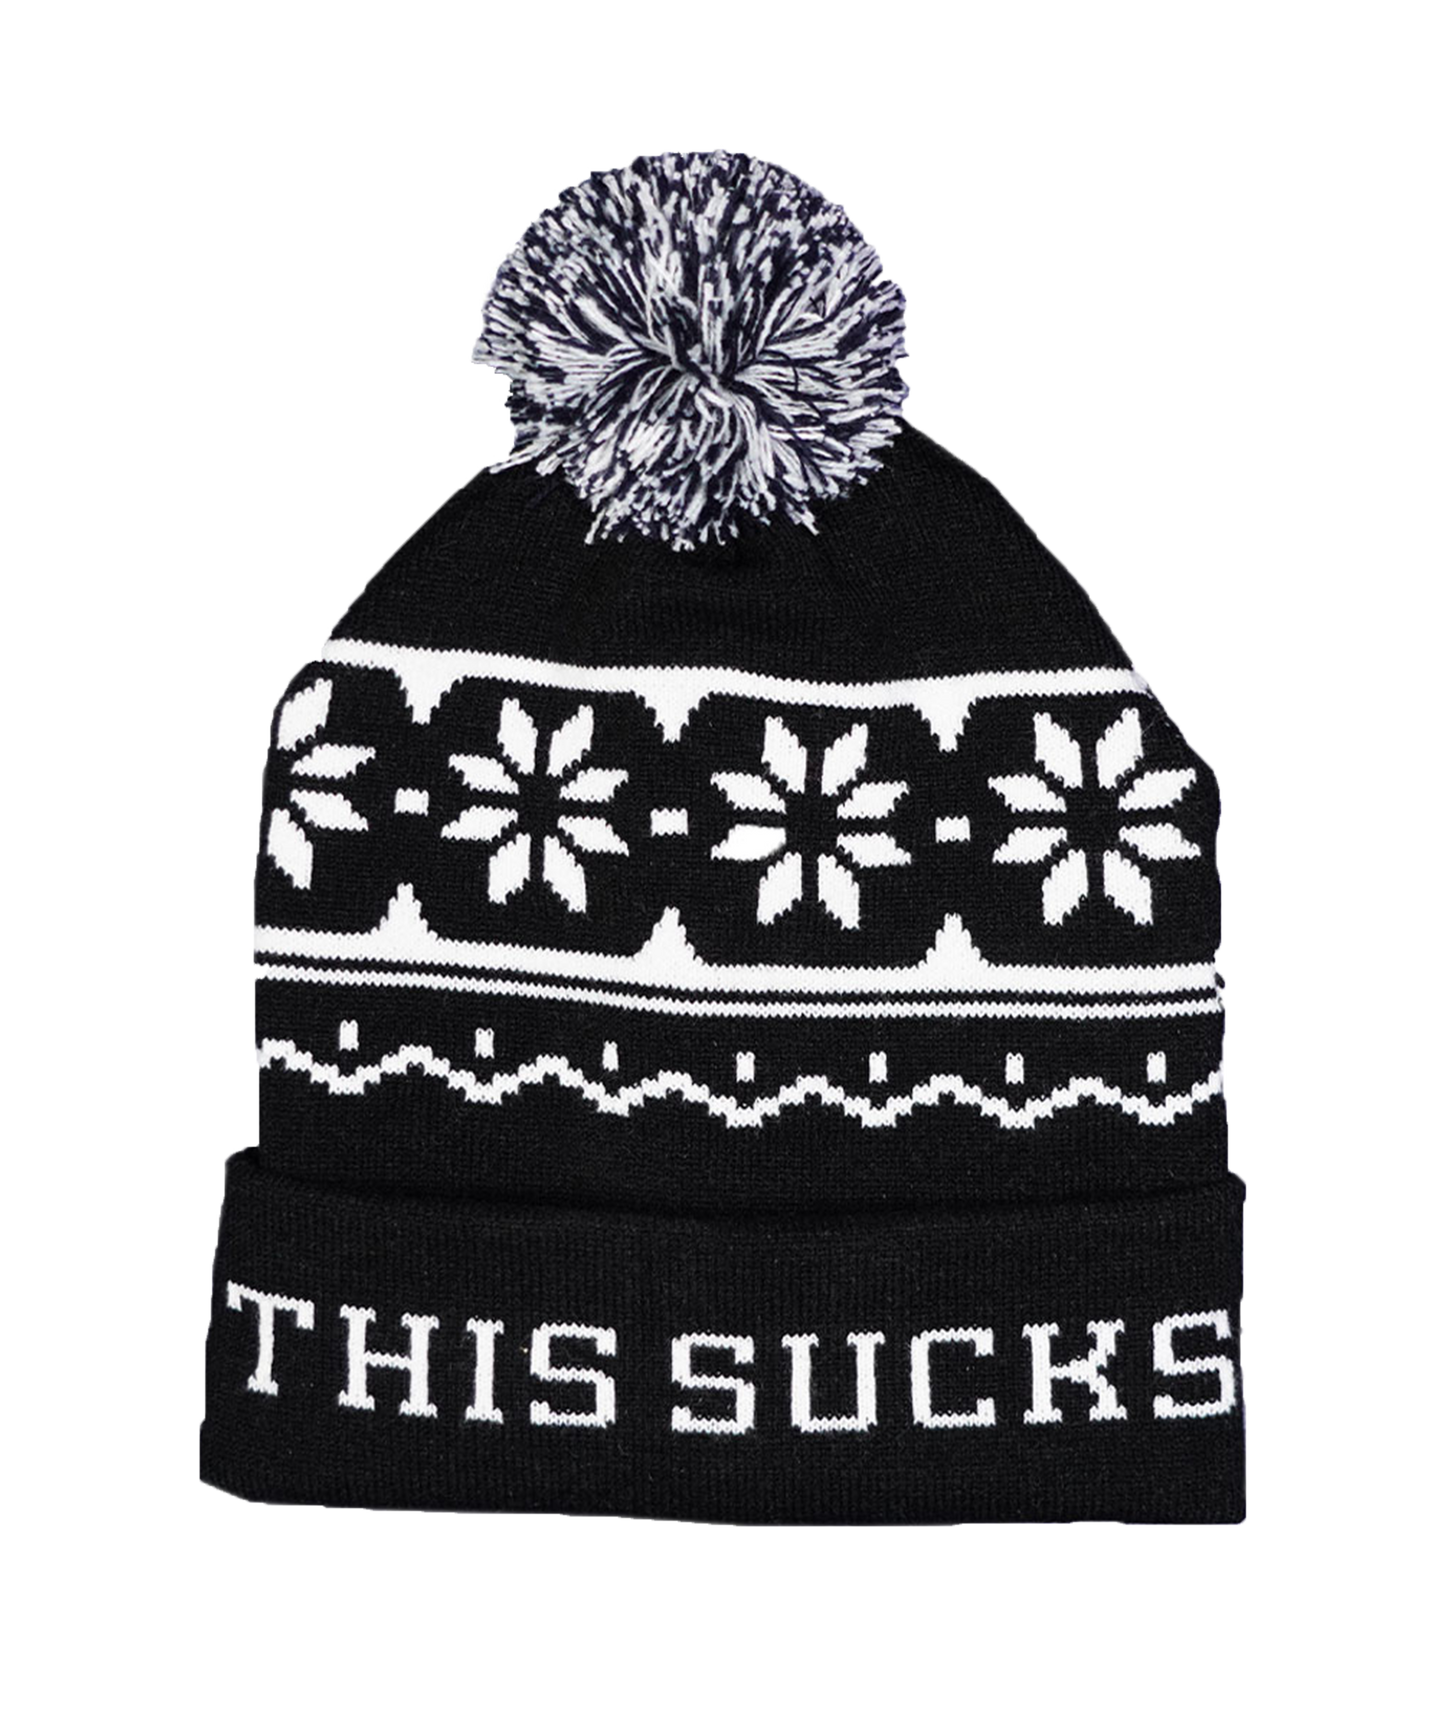 This Sucks Knit Hat